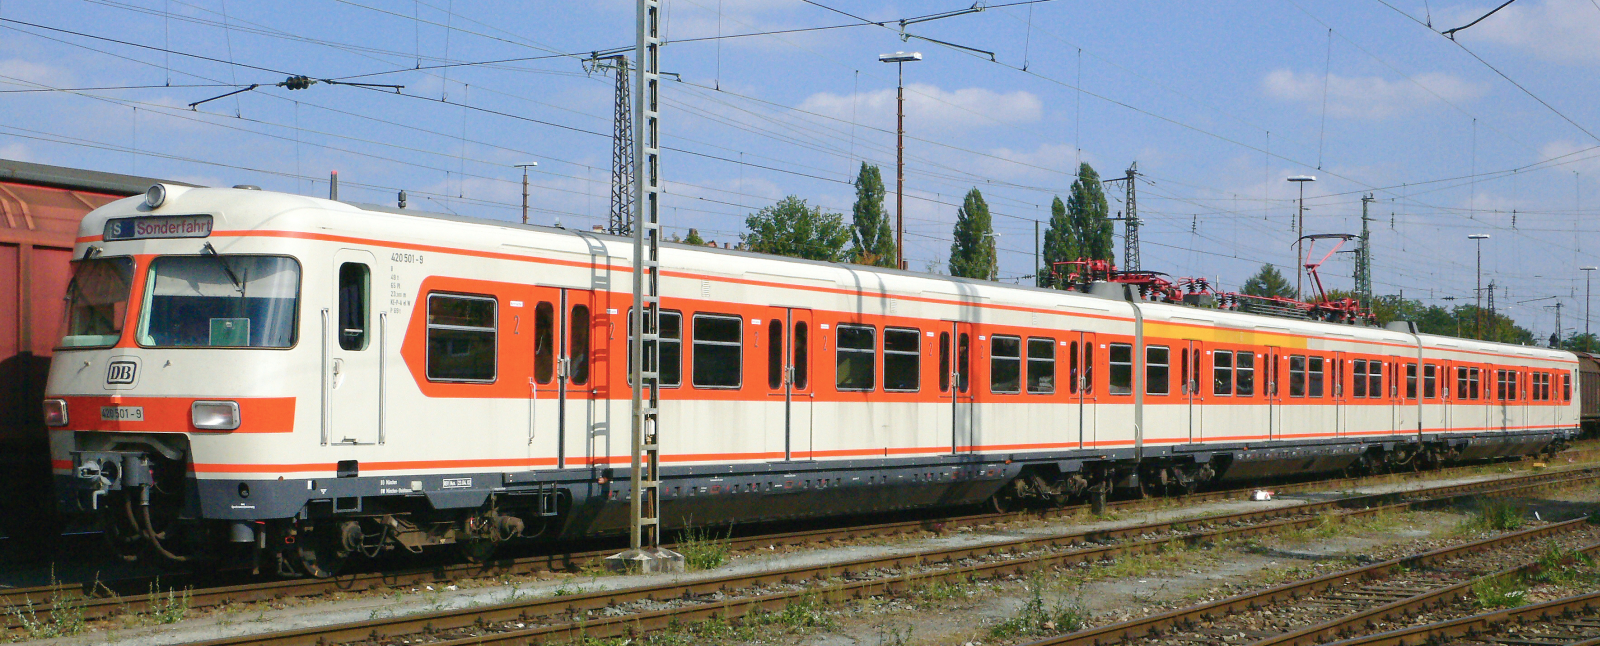 420 001 still in Bundesbahn livery